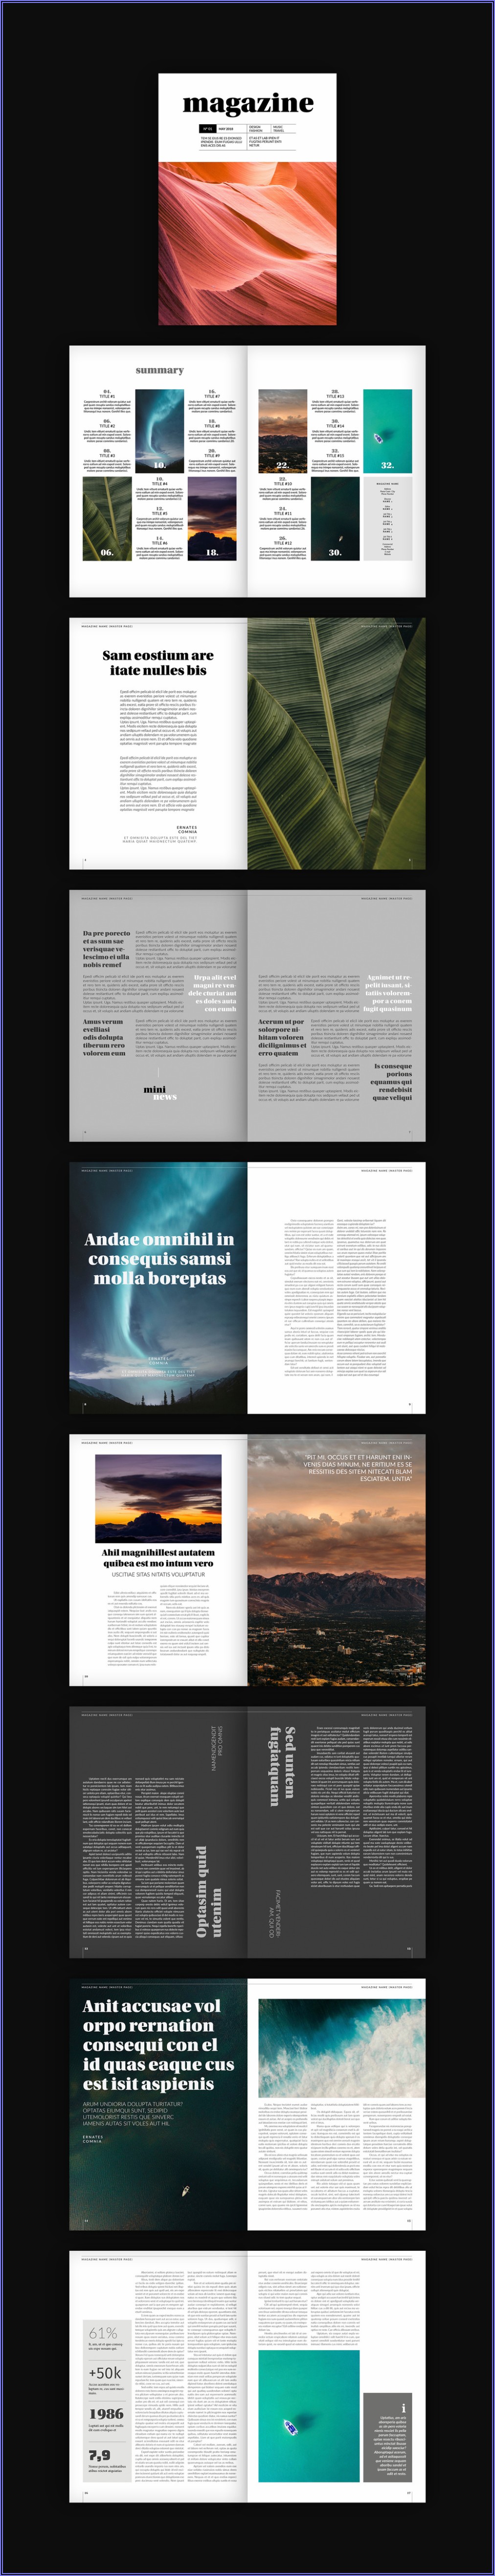 Download Adobe Indesign Magazine Template